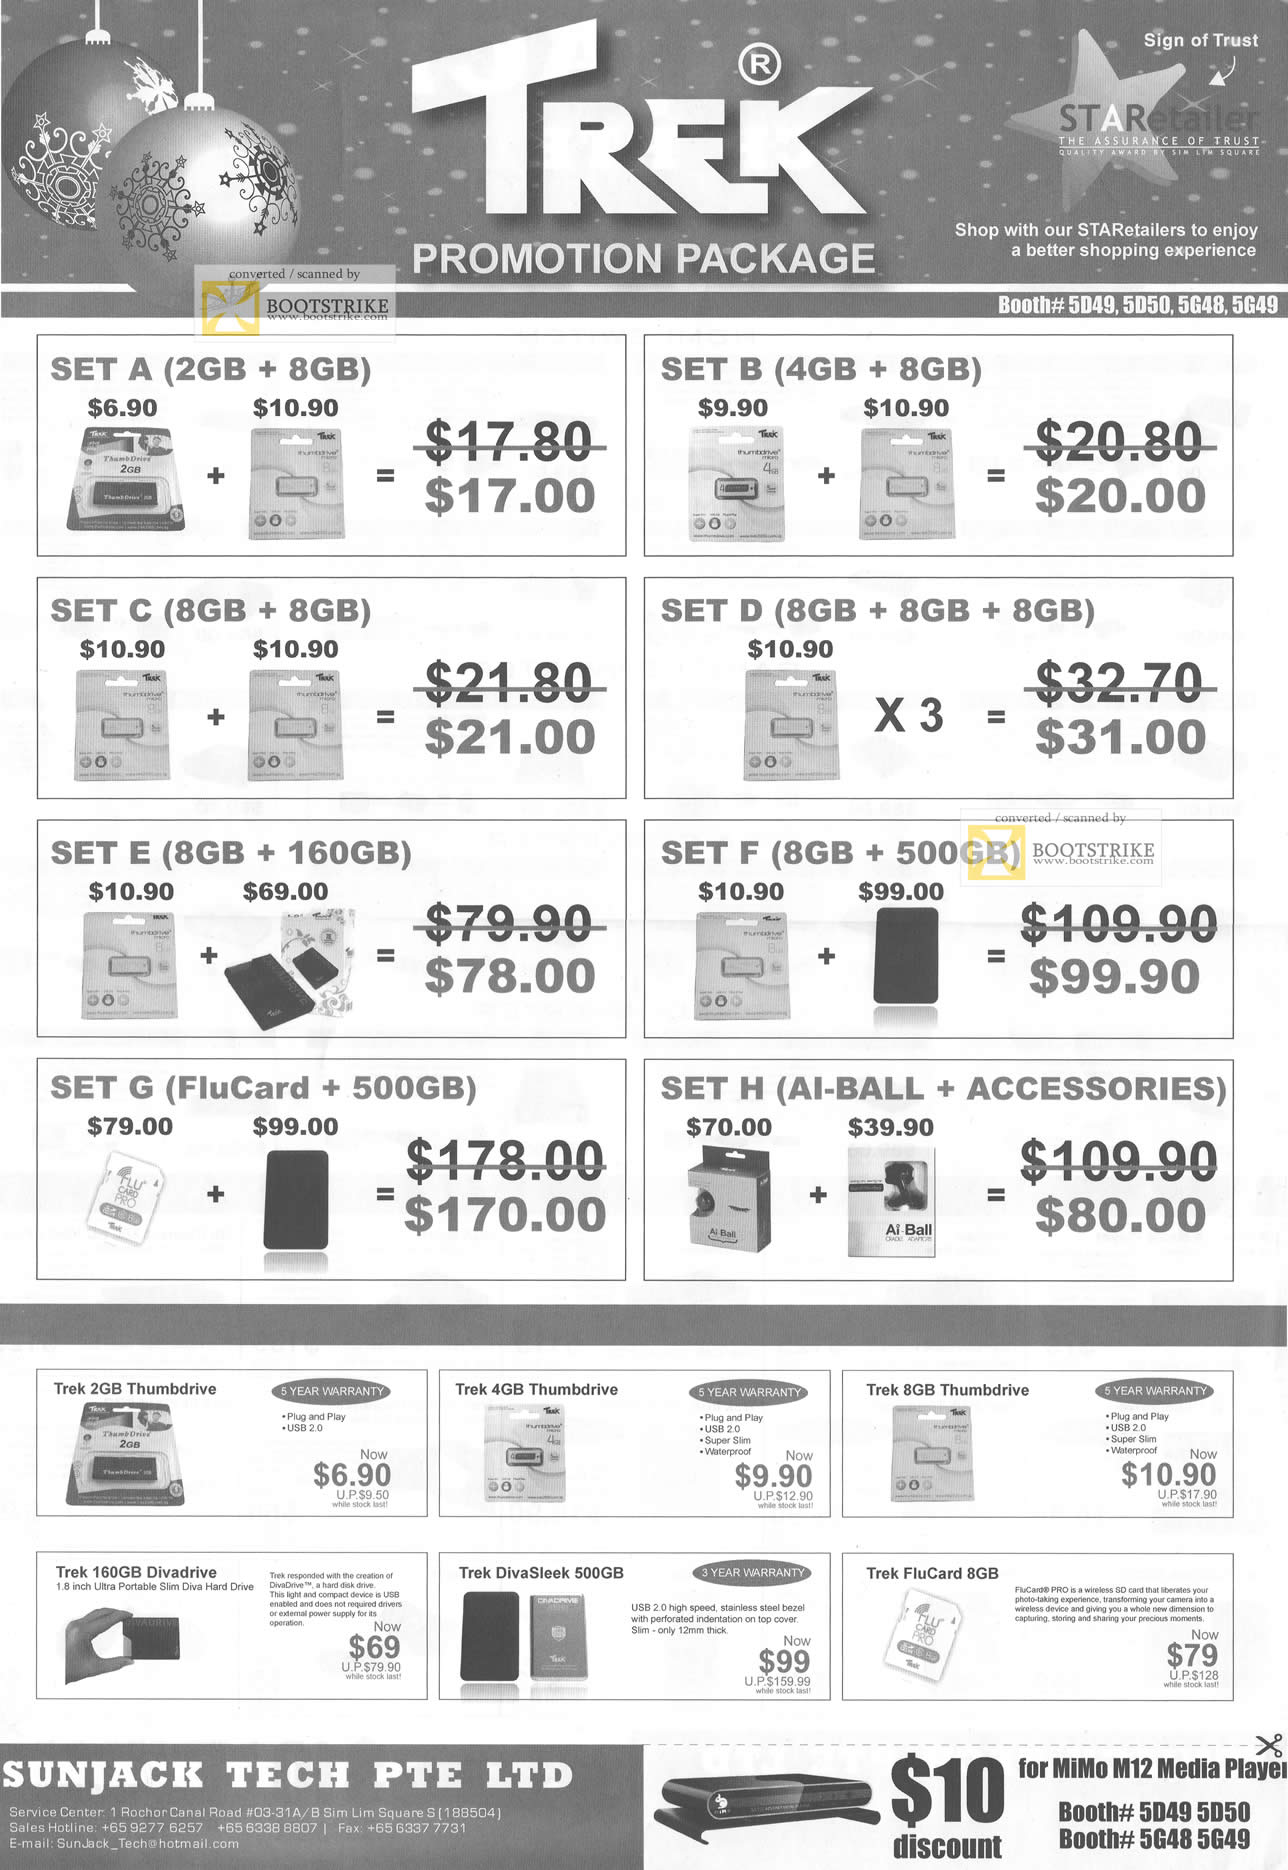 SITEX 2011 price list image brochure of Trek Flash Drives, Thumbdrive, Divadrive, DivaSleek, FluCard